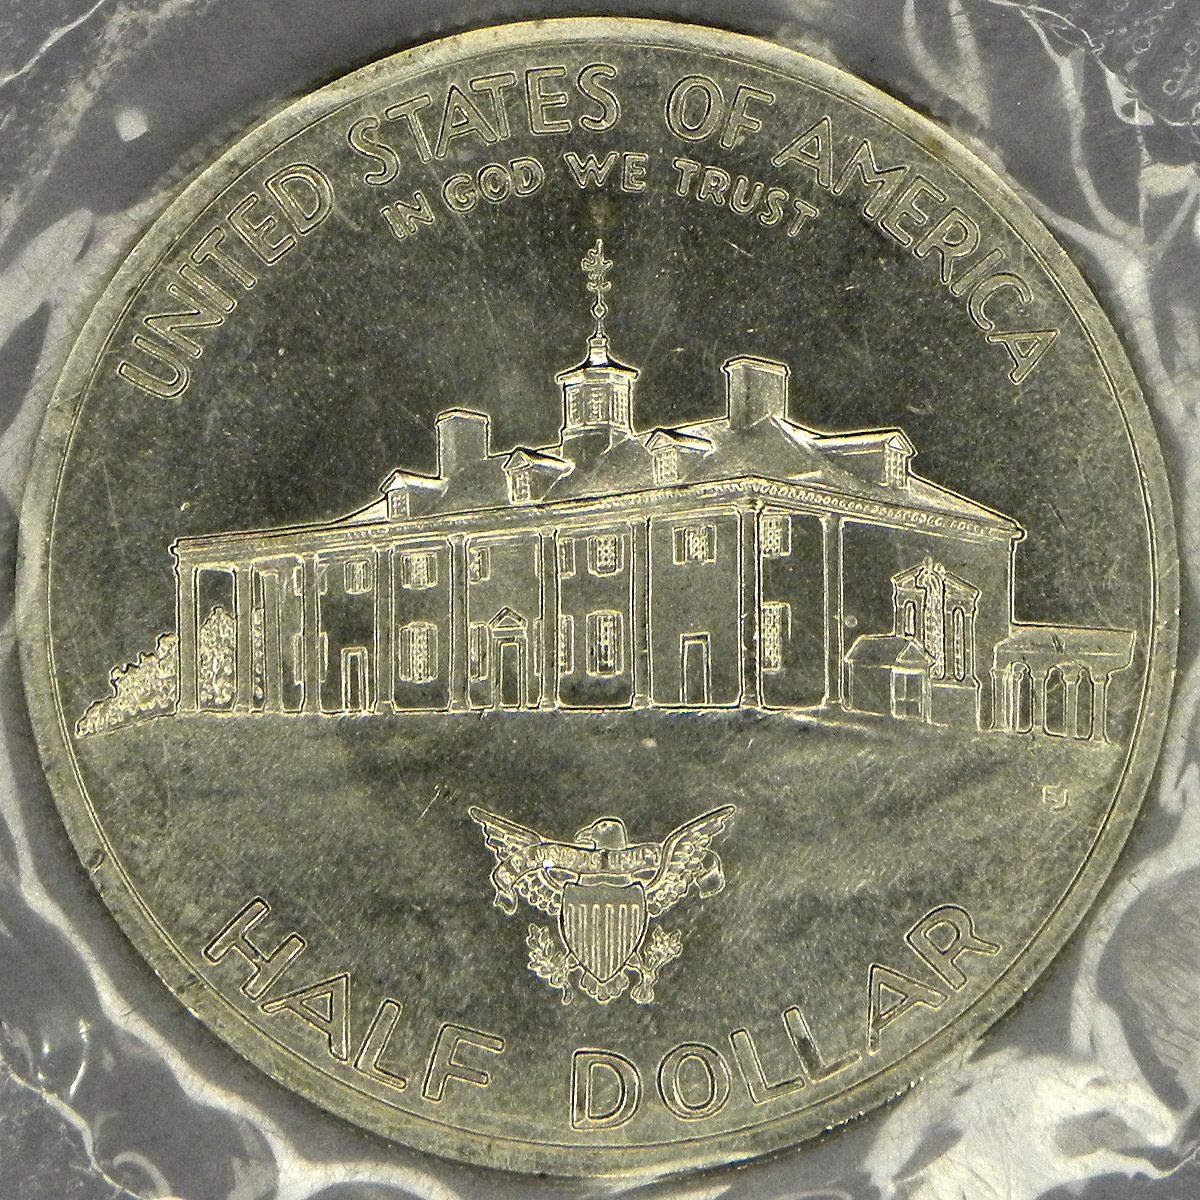 1982 George Washington Half Dollar (reverse)